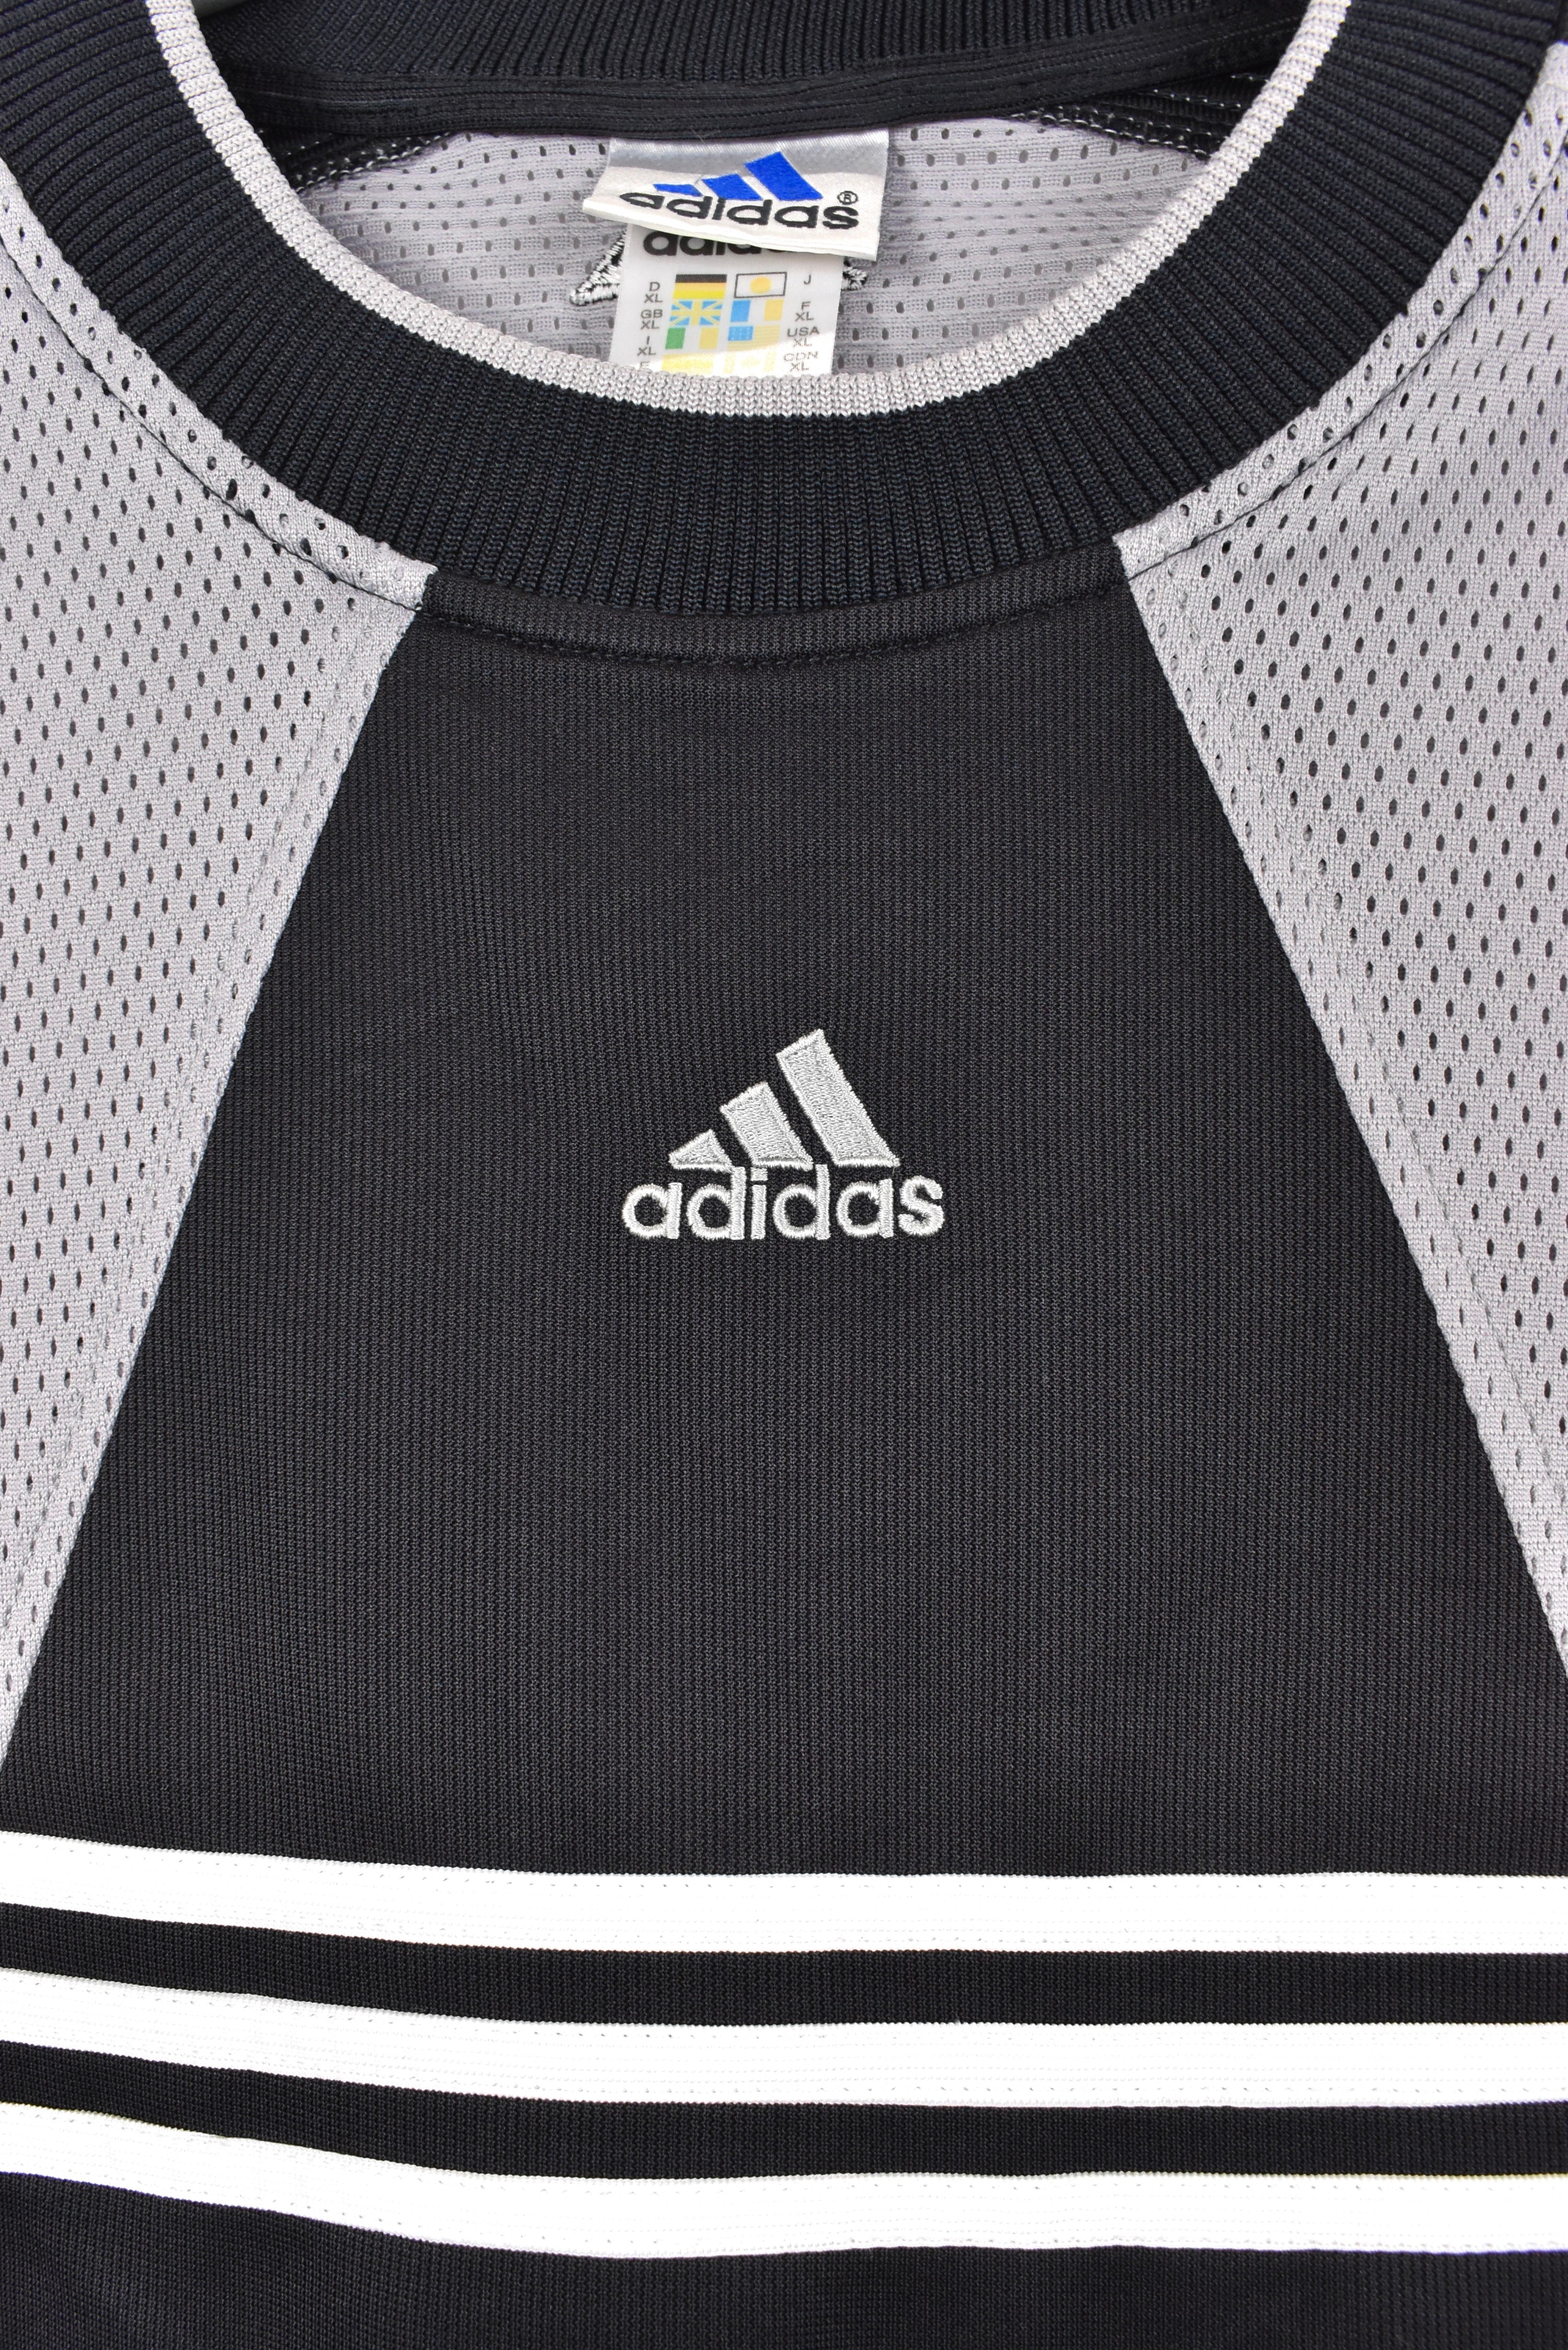 Vintage Adidas shirt, sportswear black embroidered tee - AU XXL ADIDAS